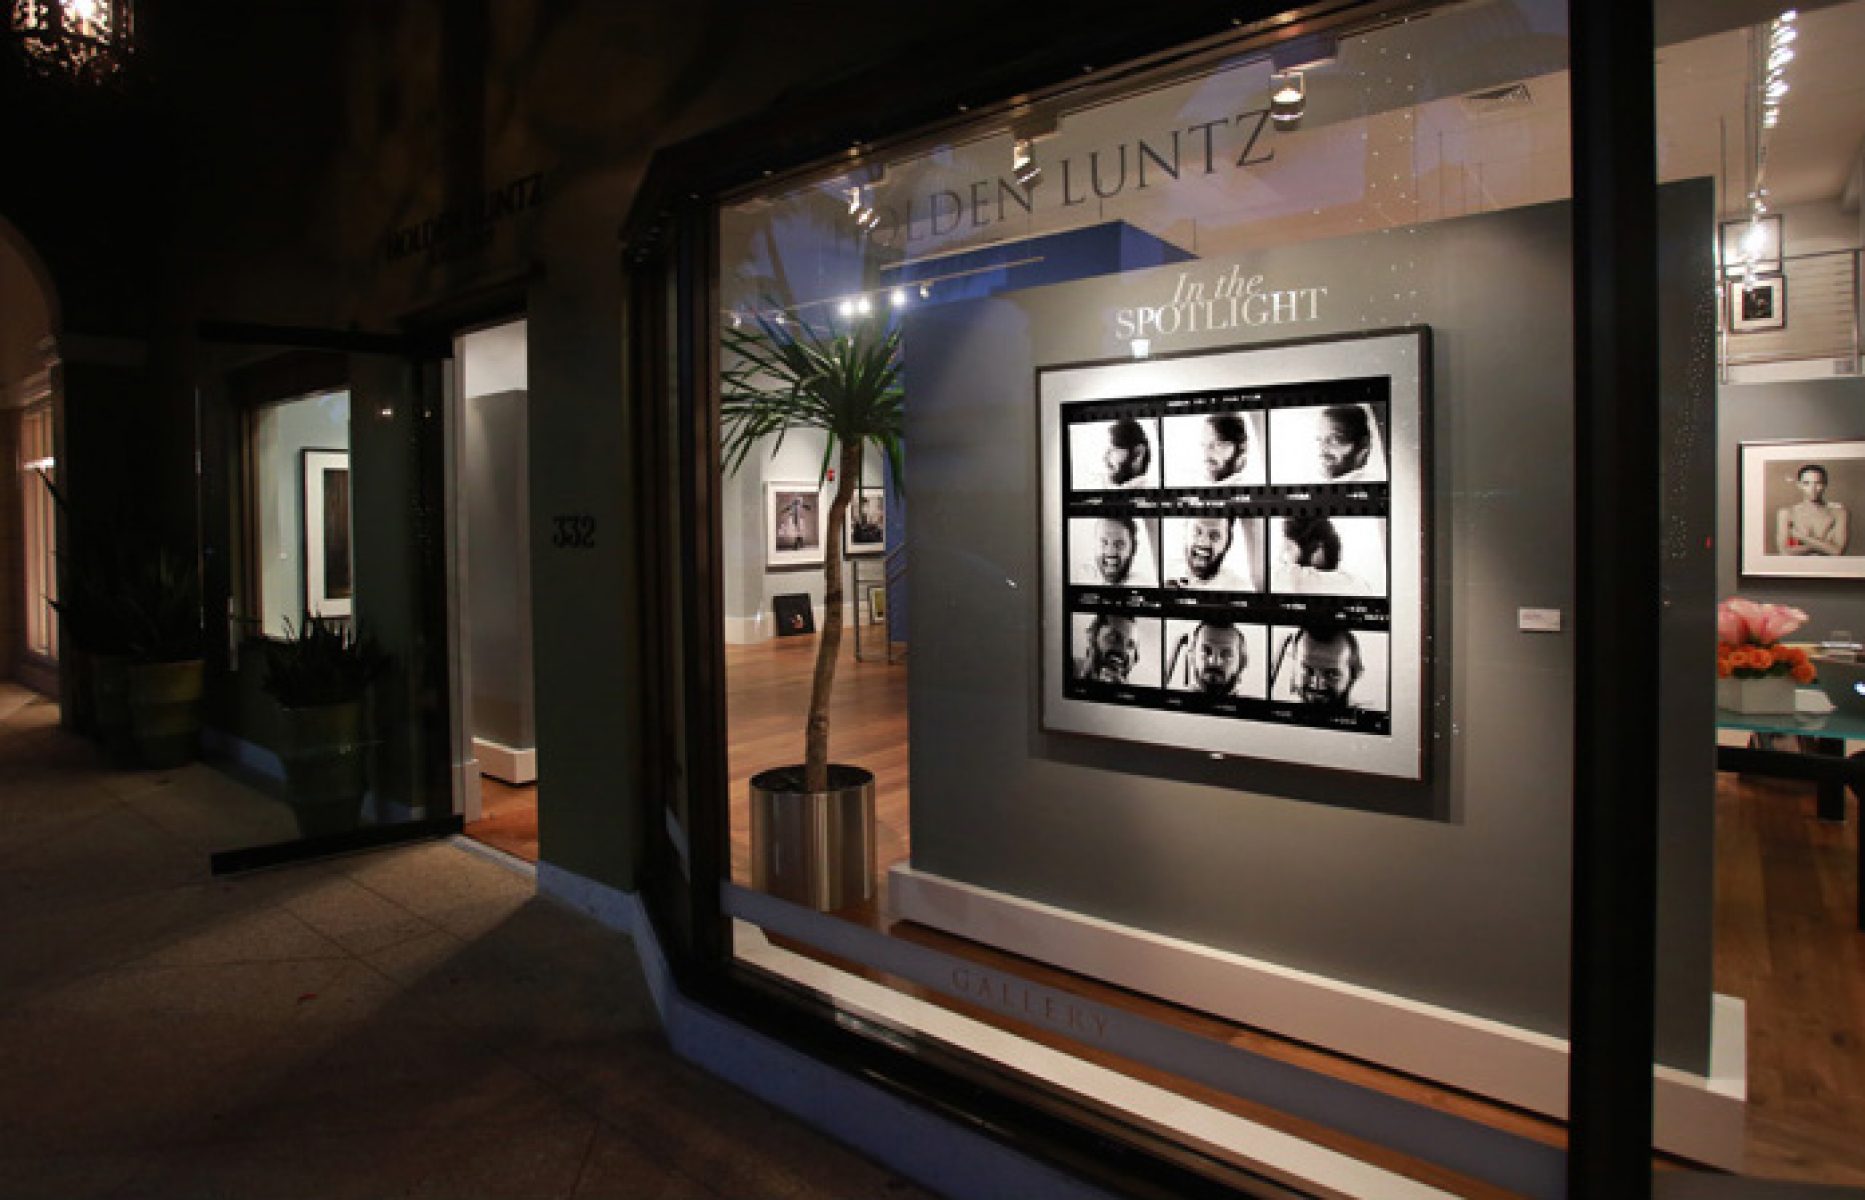 Holden Luntz Gallery Exhibition